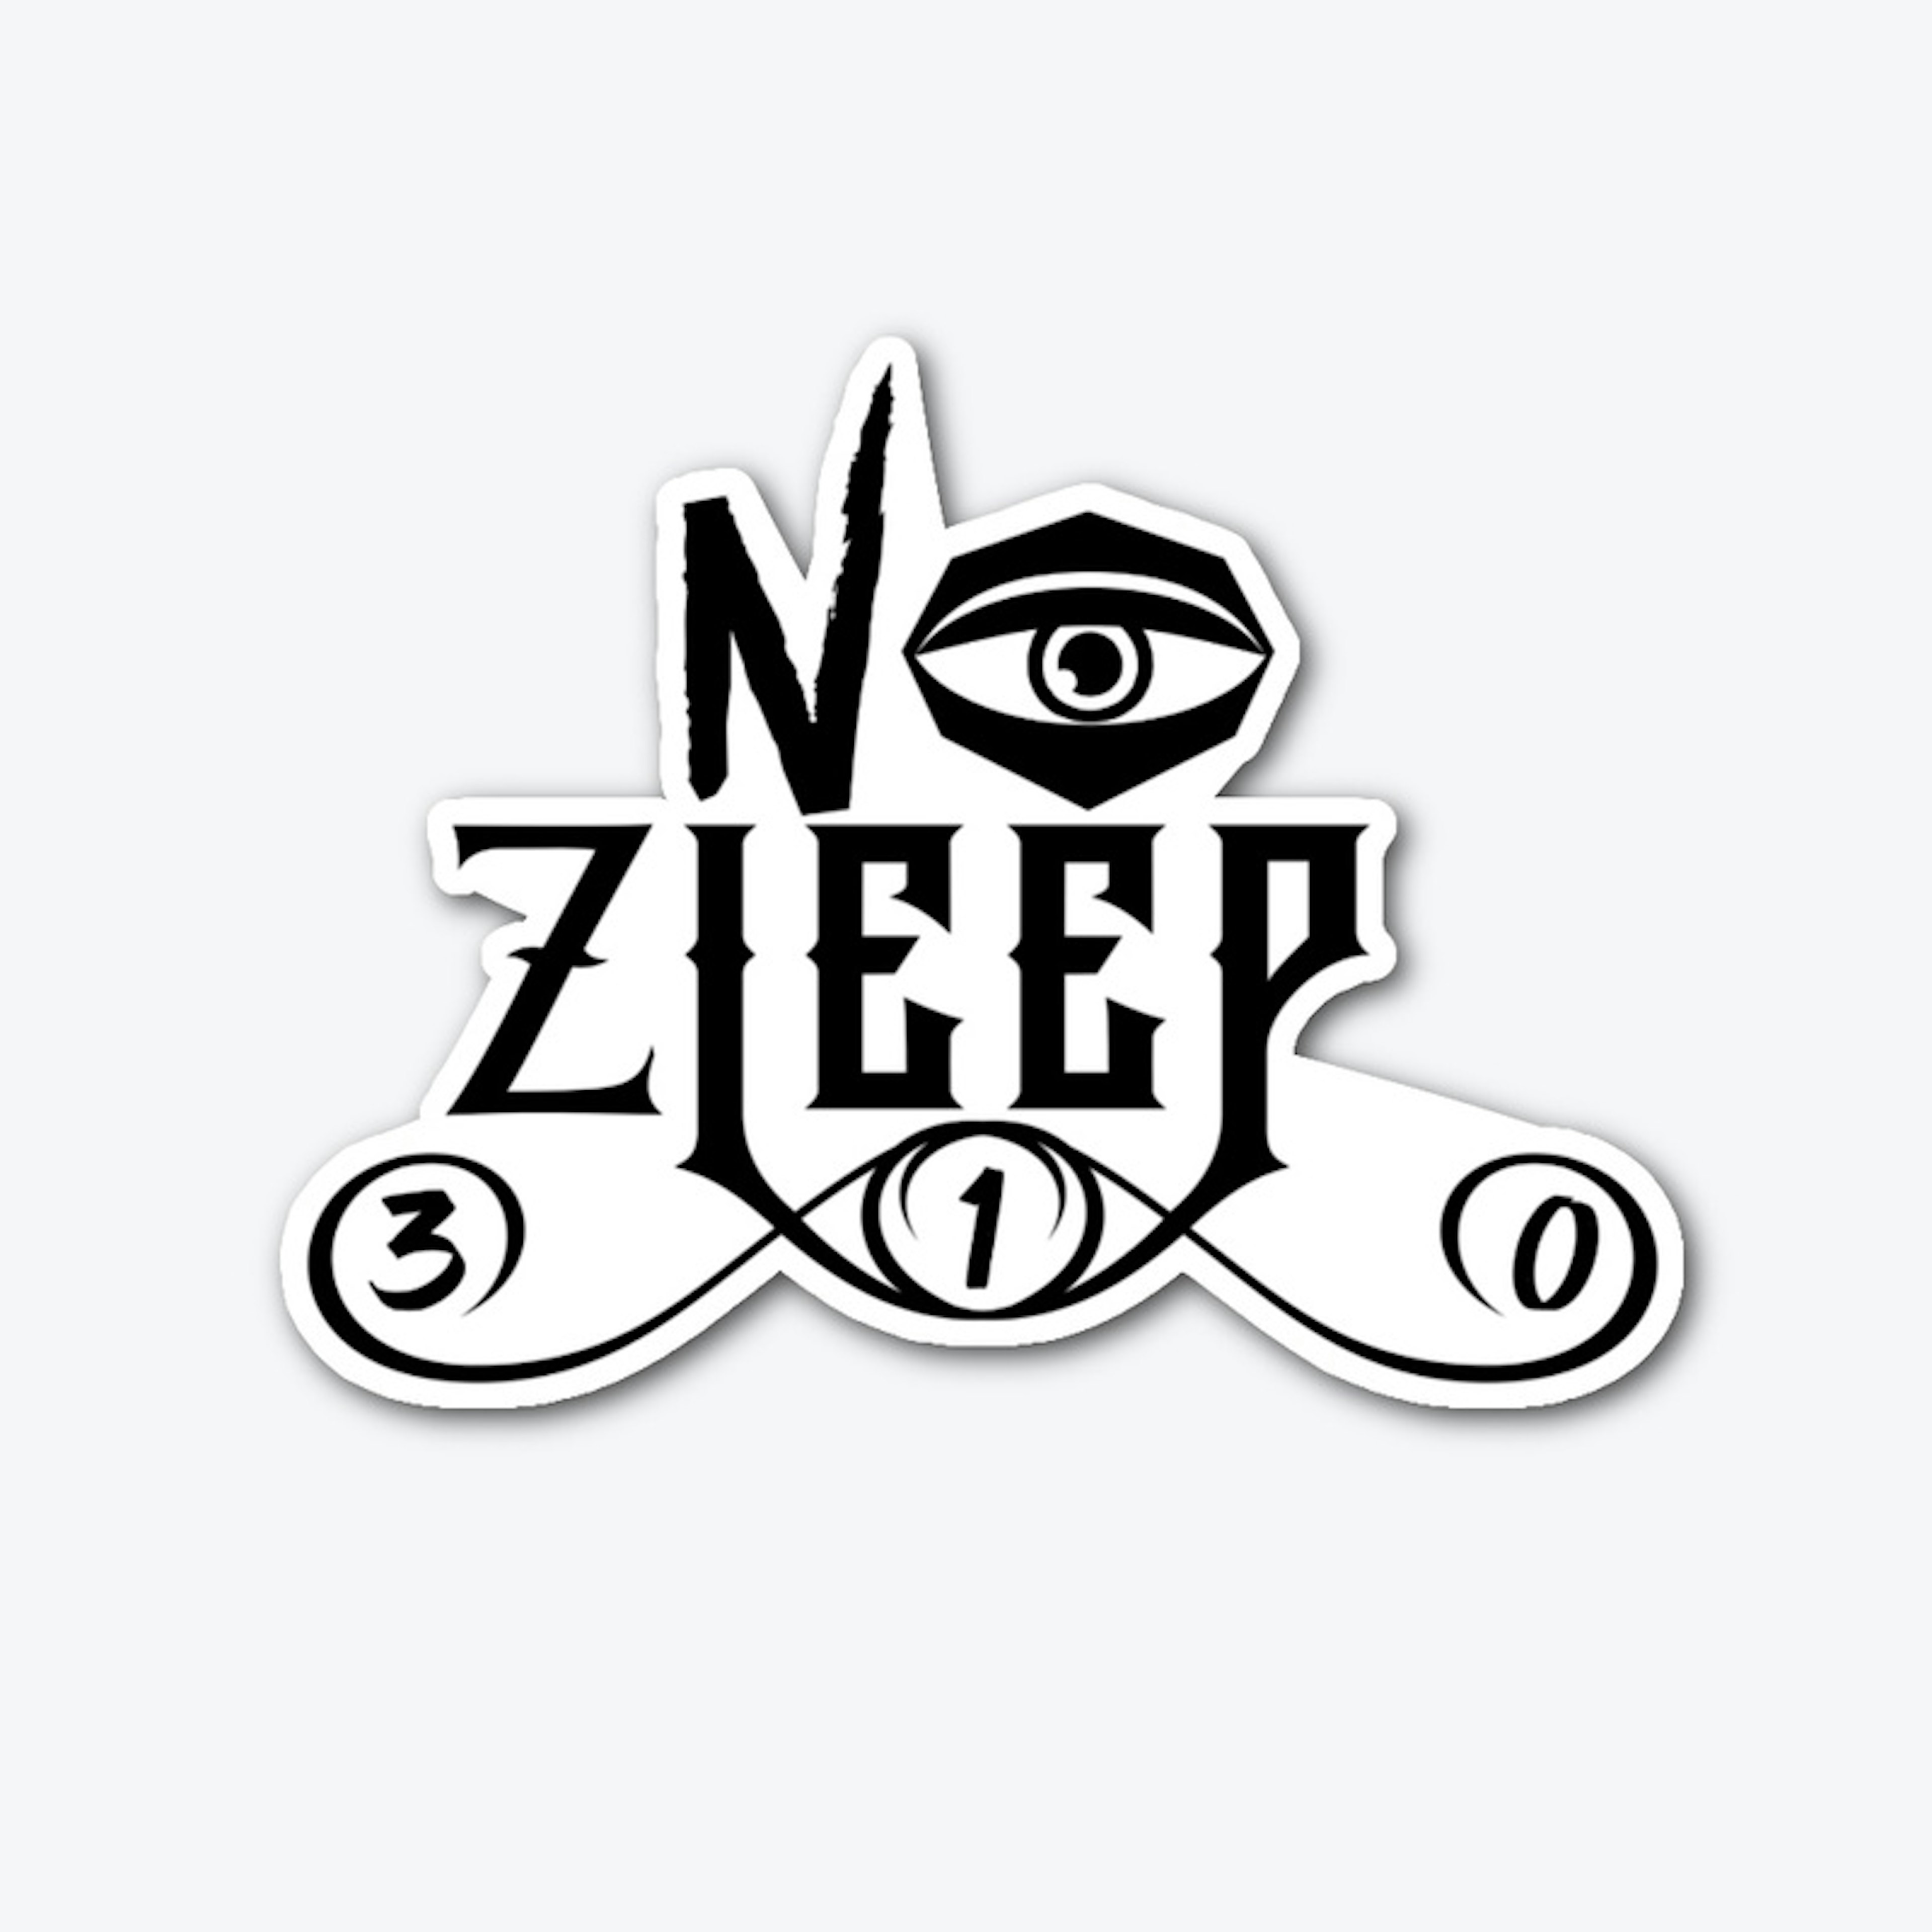 #NOZLEEP NO ZLEEP 310